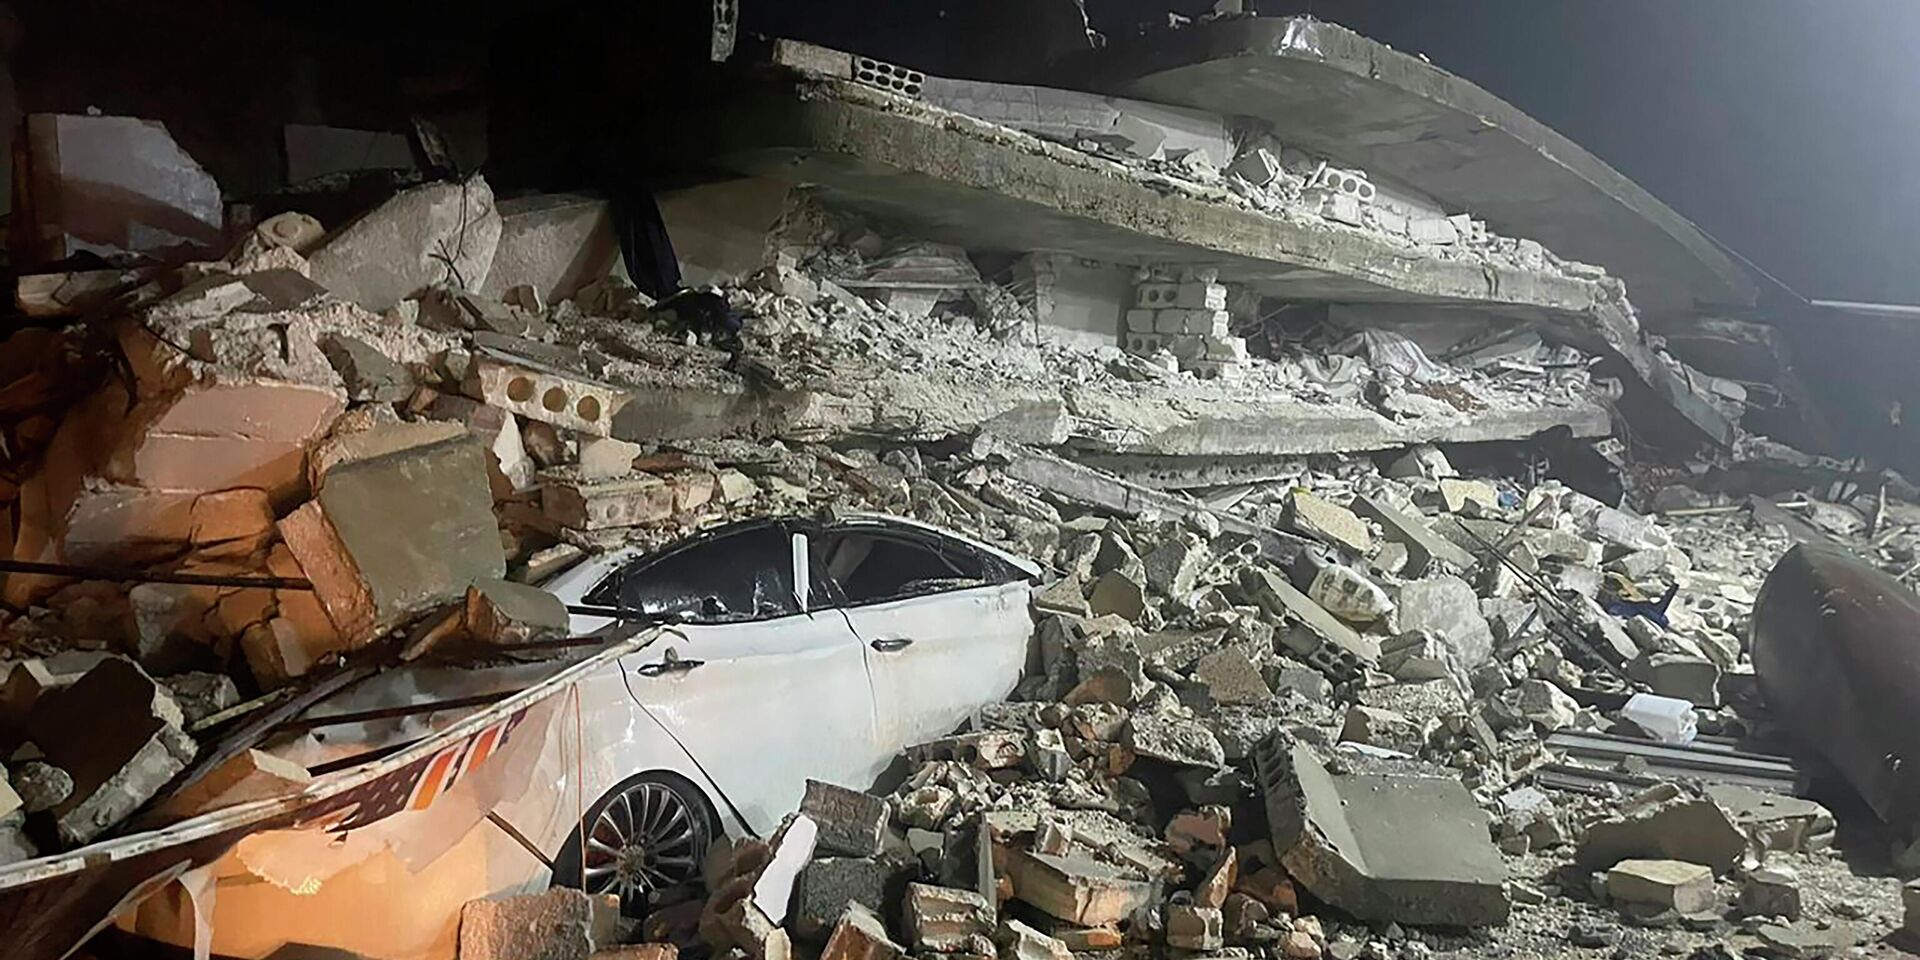 Последствия землетрясения в городе Азмарин, провинция Идлиб, Сирия. 6 февраля 2023 года - ИноСМИ, 1920, 11.02.2023